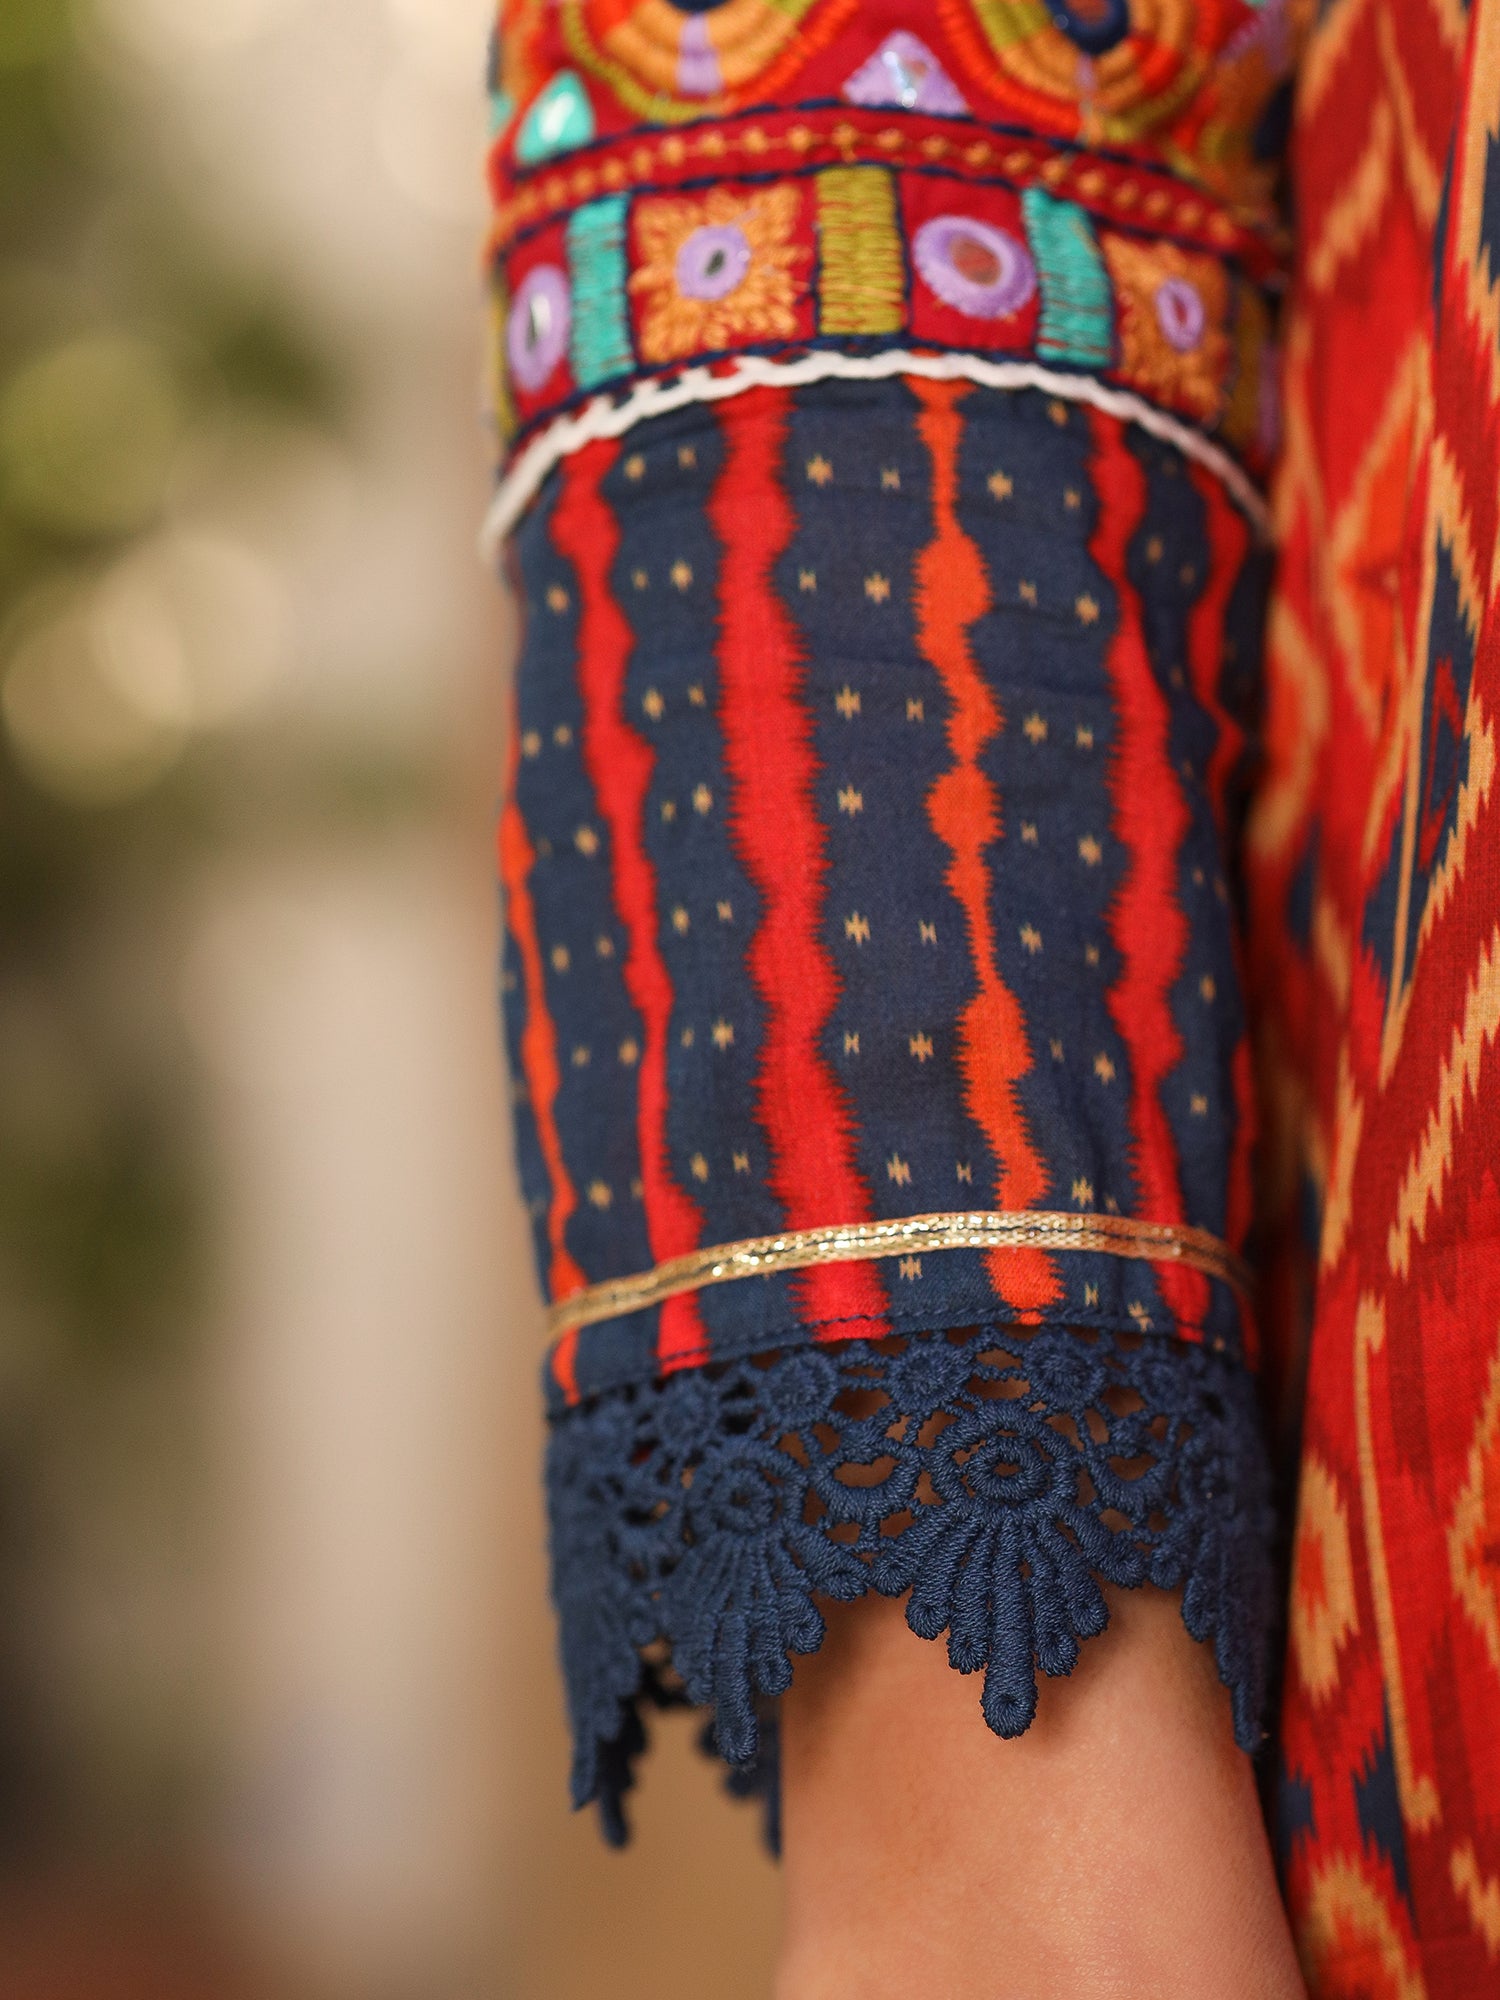 Juniper Rust Cotton Ikat Printed Layered Maxi Dress With Thread Embroidery & Dori Tassel Tie-Up At Waist